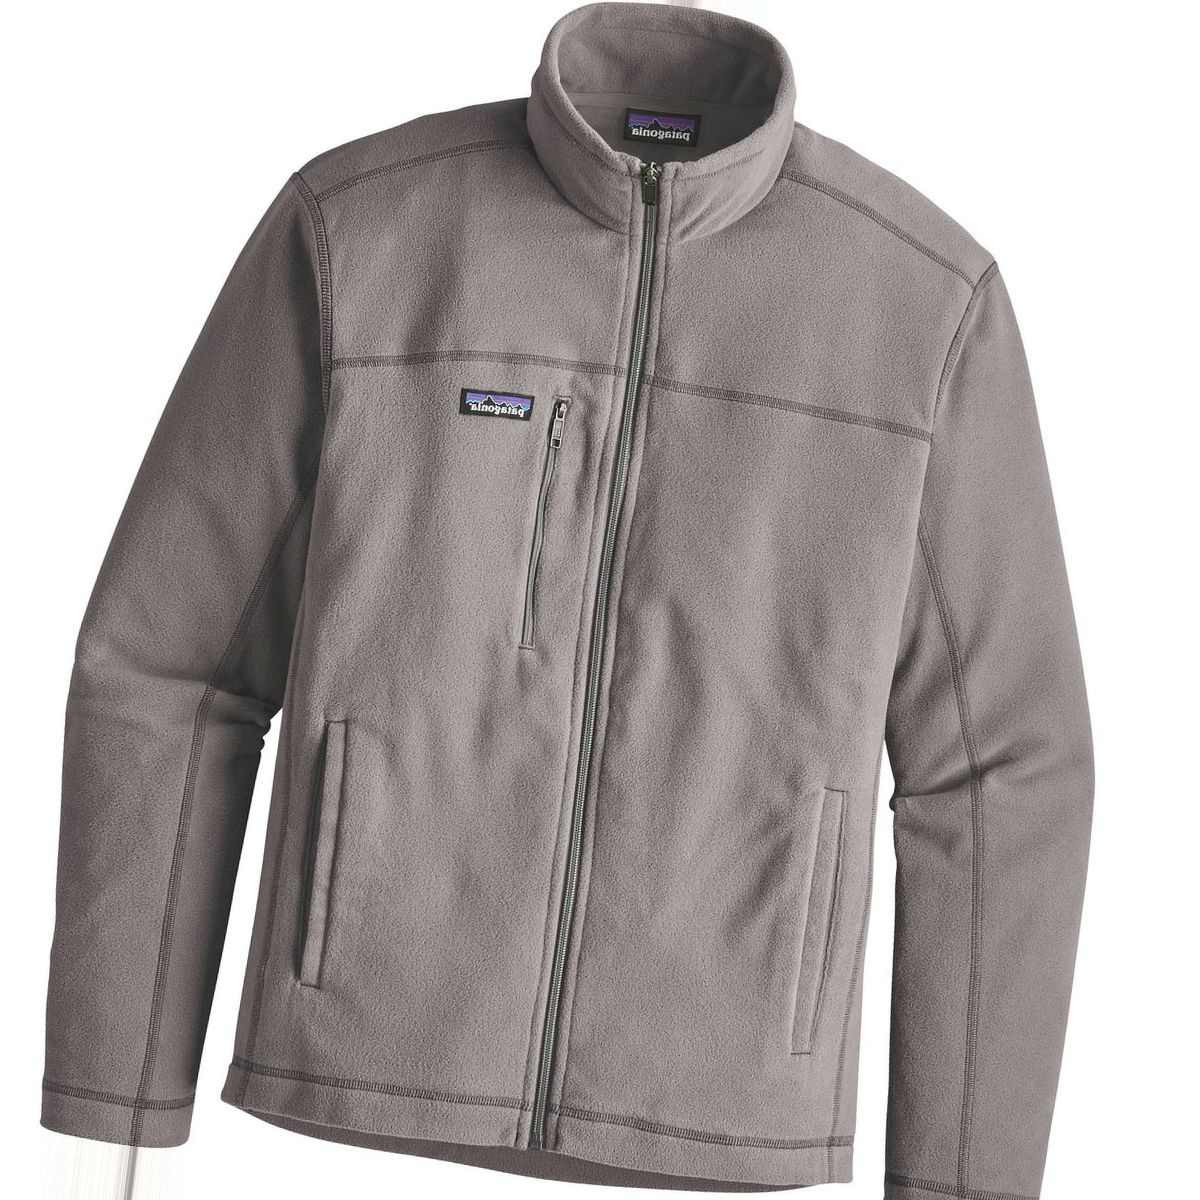 Patagonia Micro D Fleece Jacket - Men's